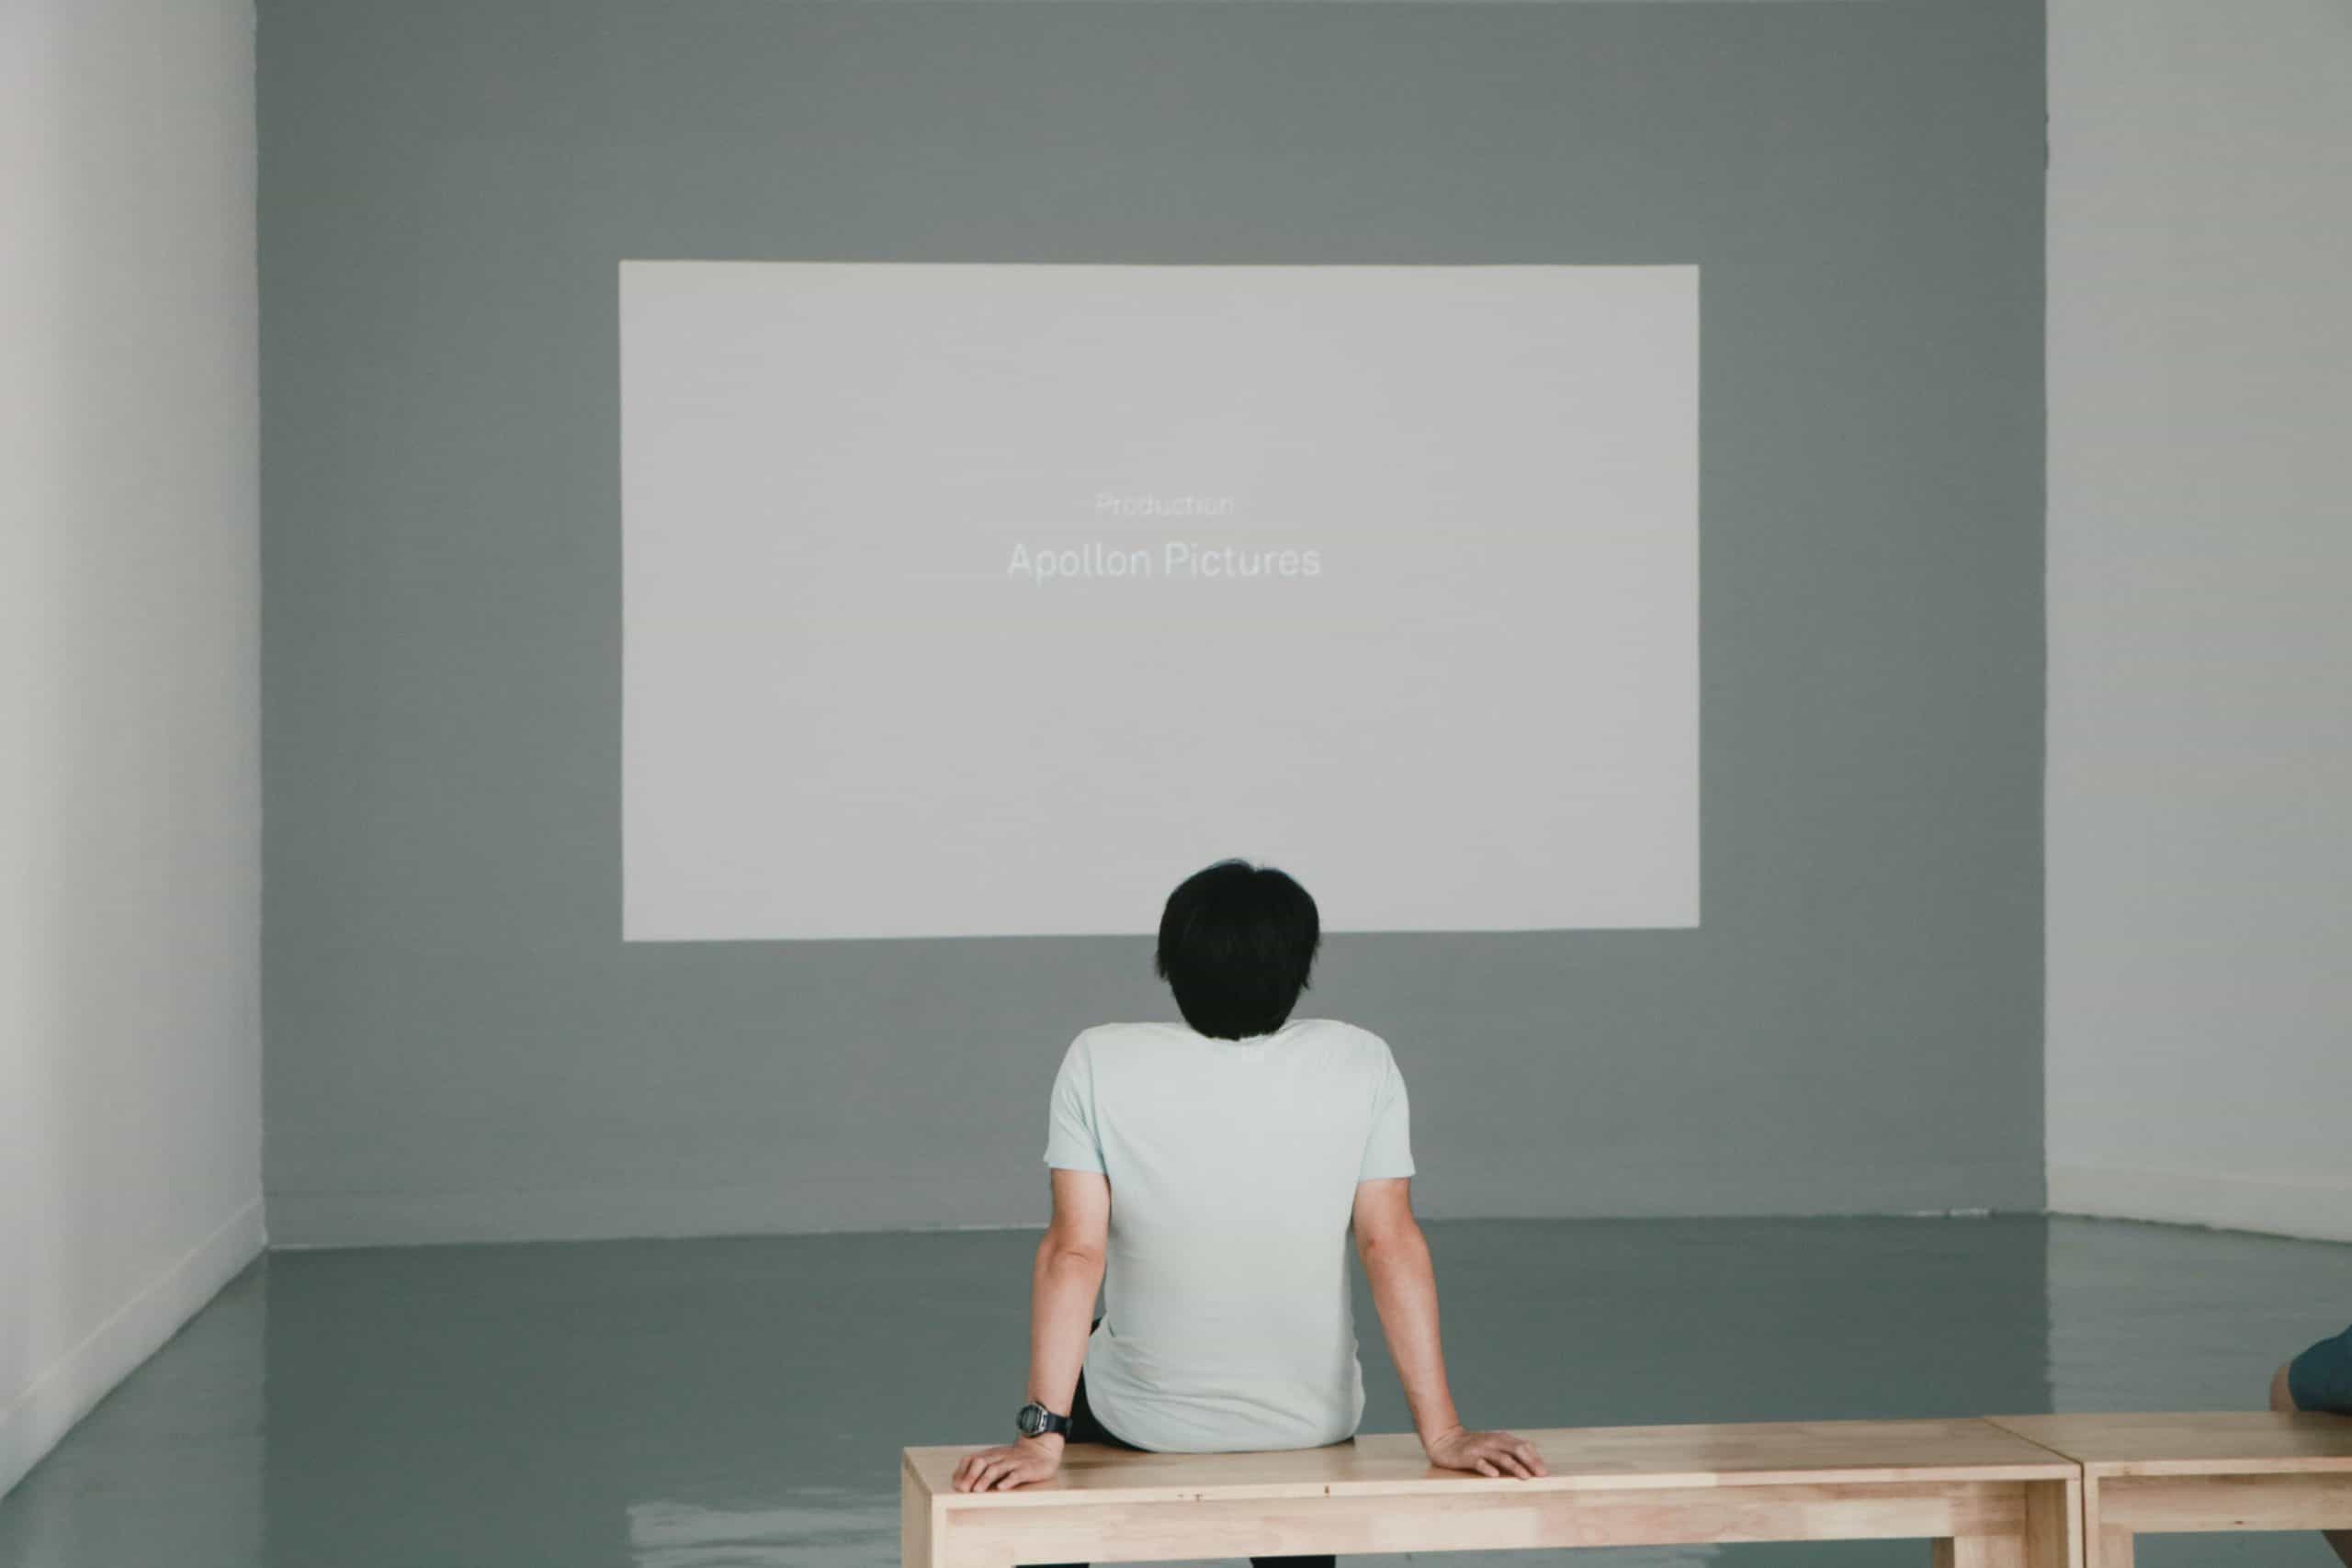 Man watching a blank screen